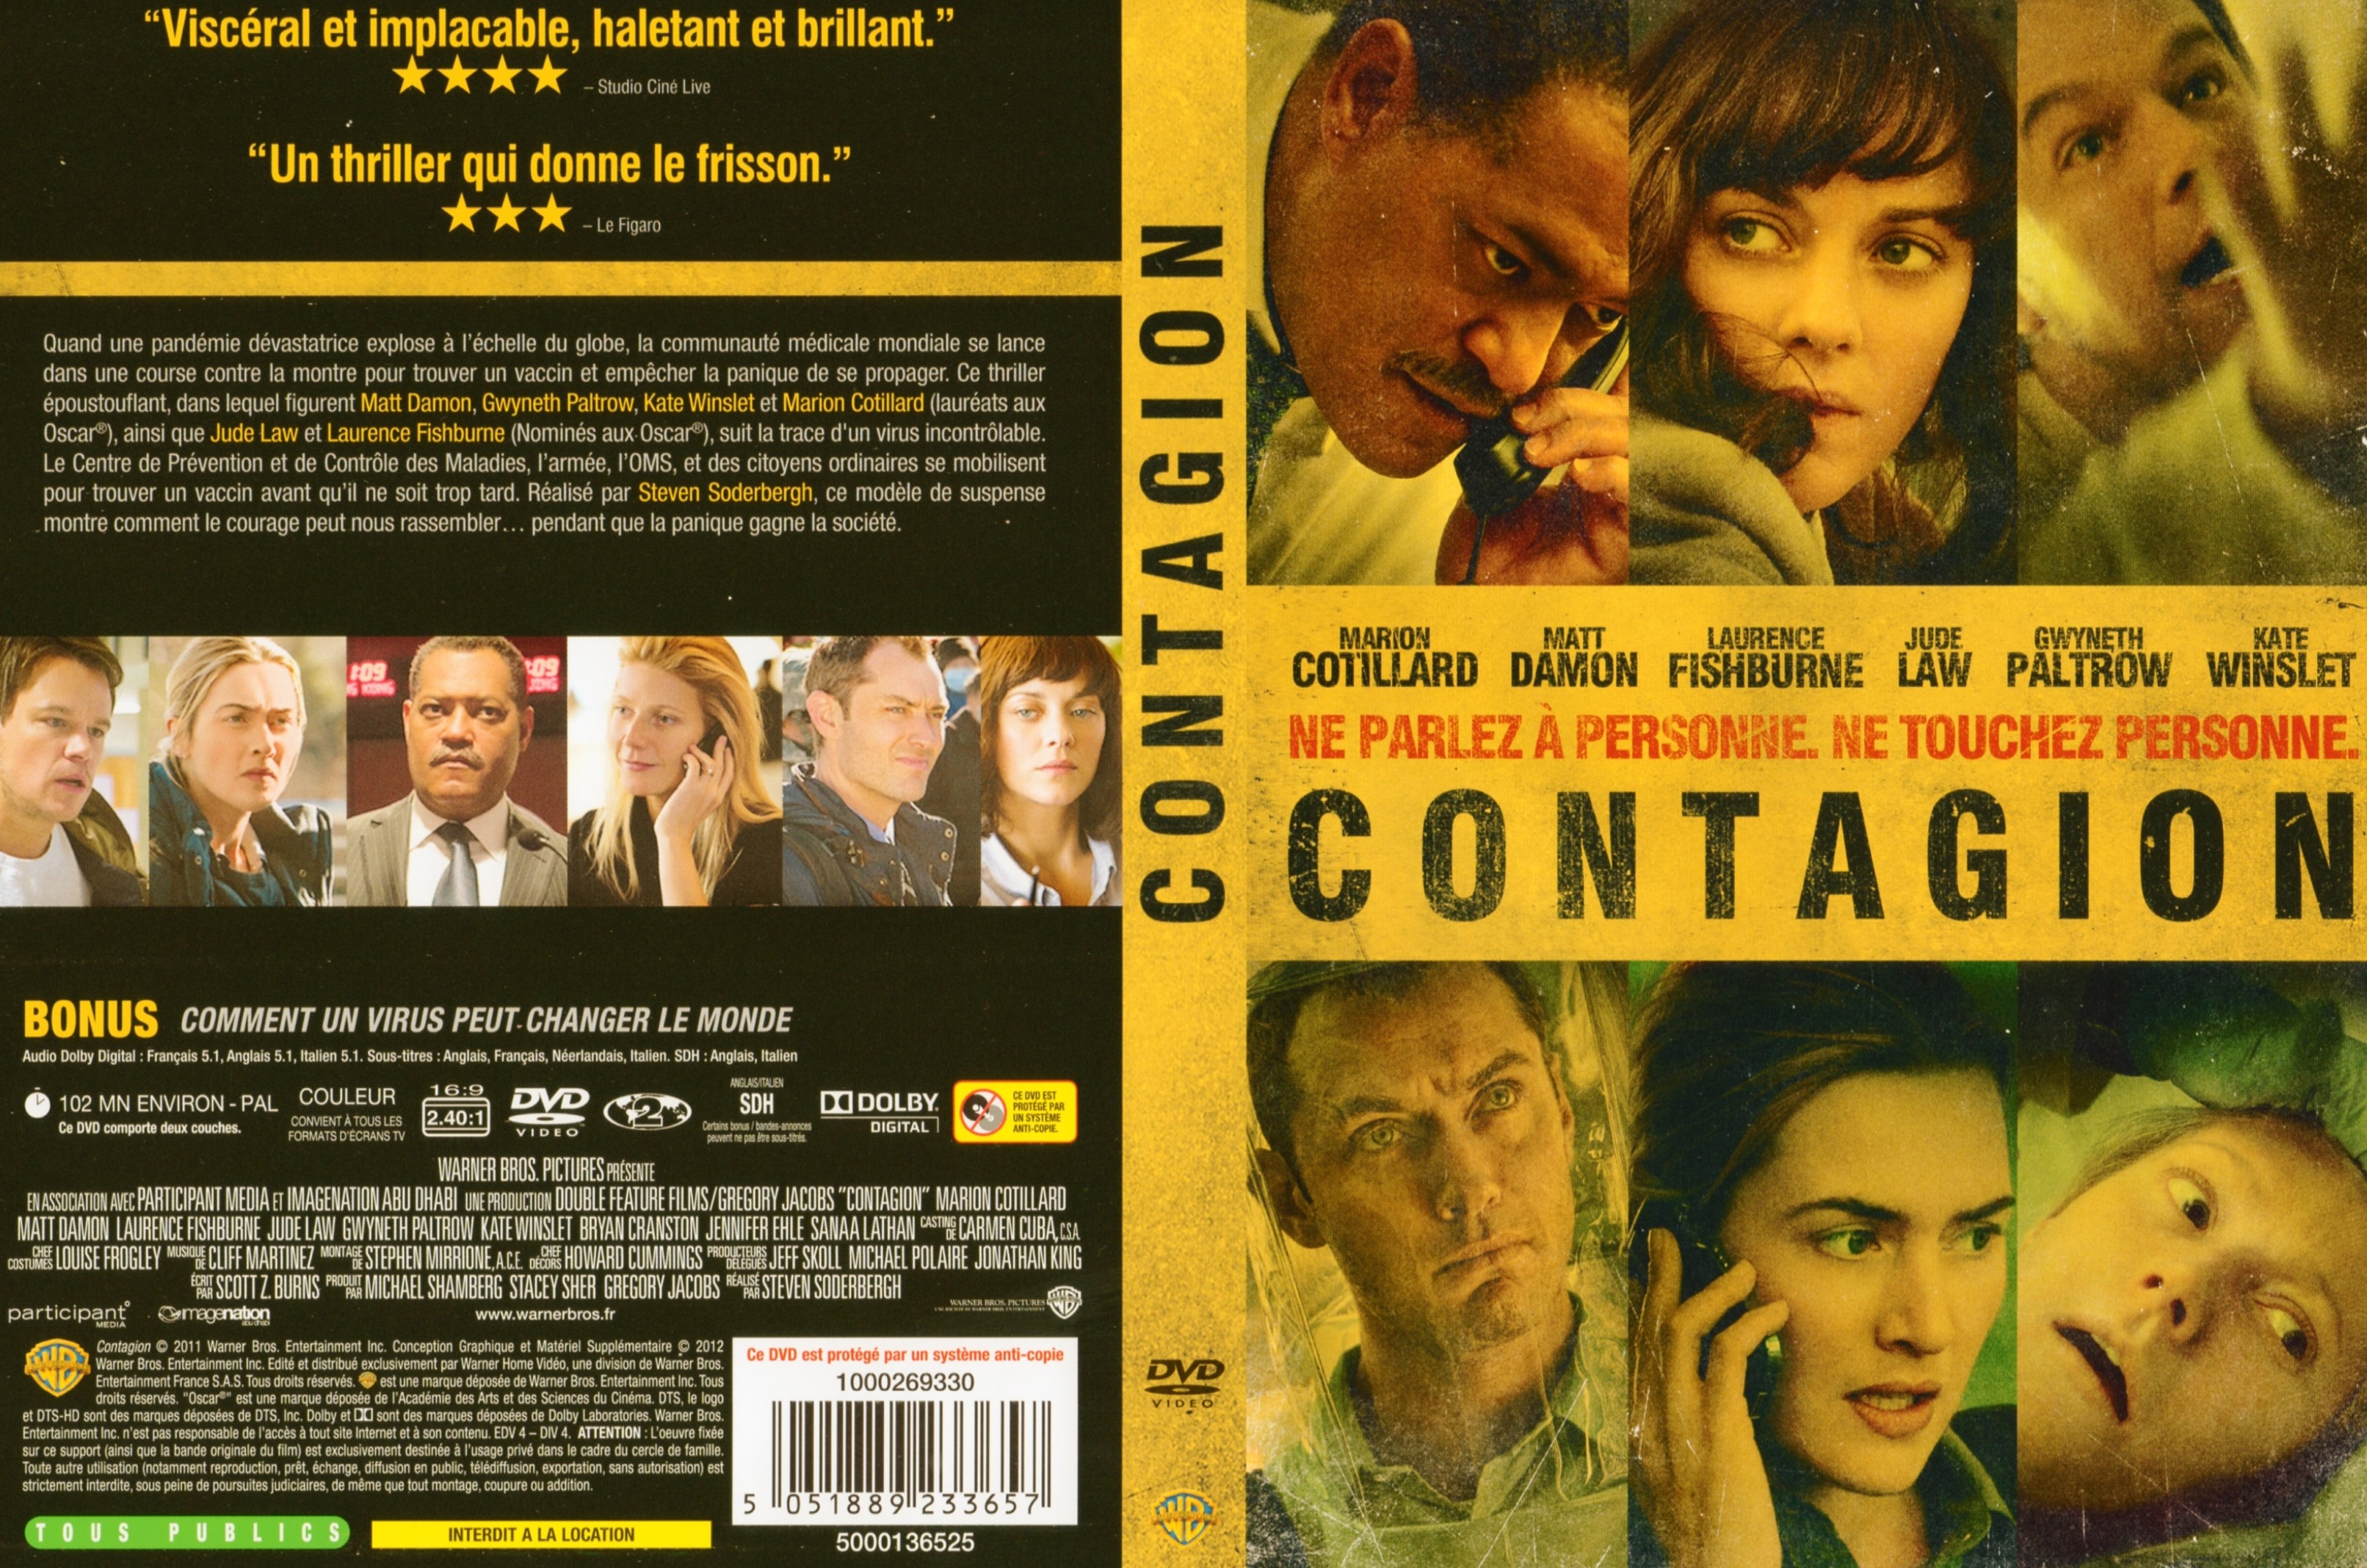 Jaquette DVD Contagion